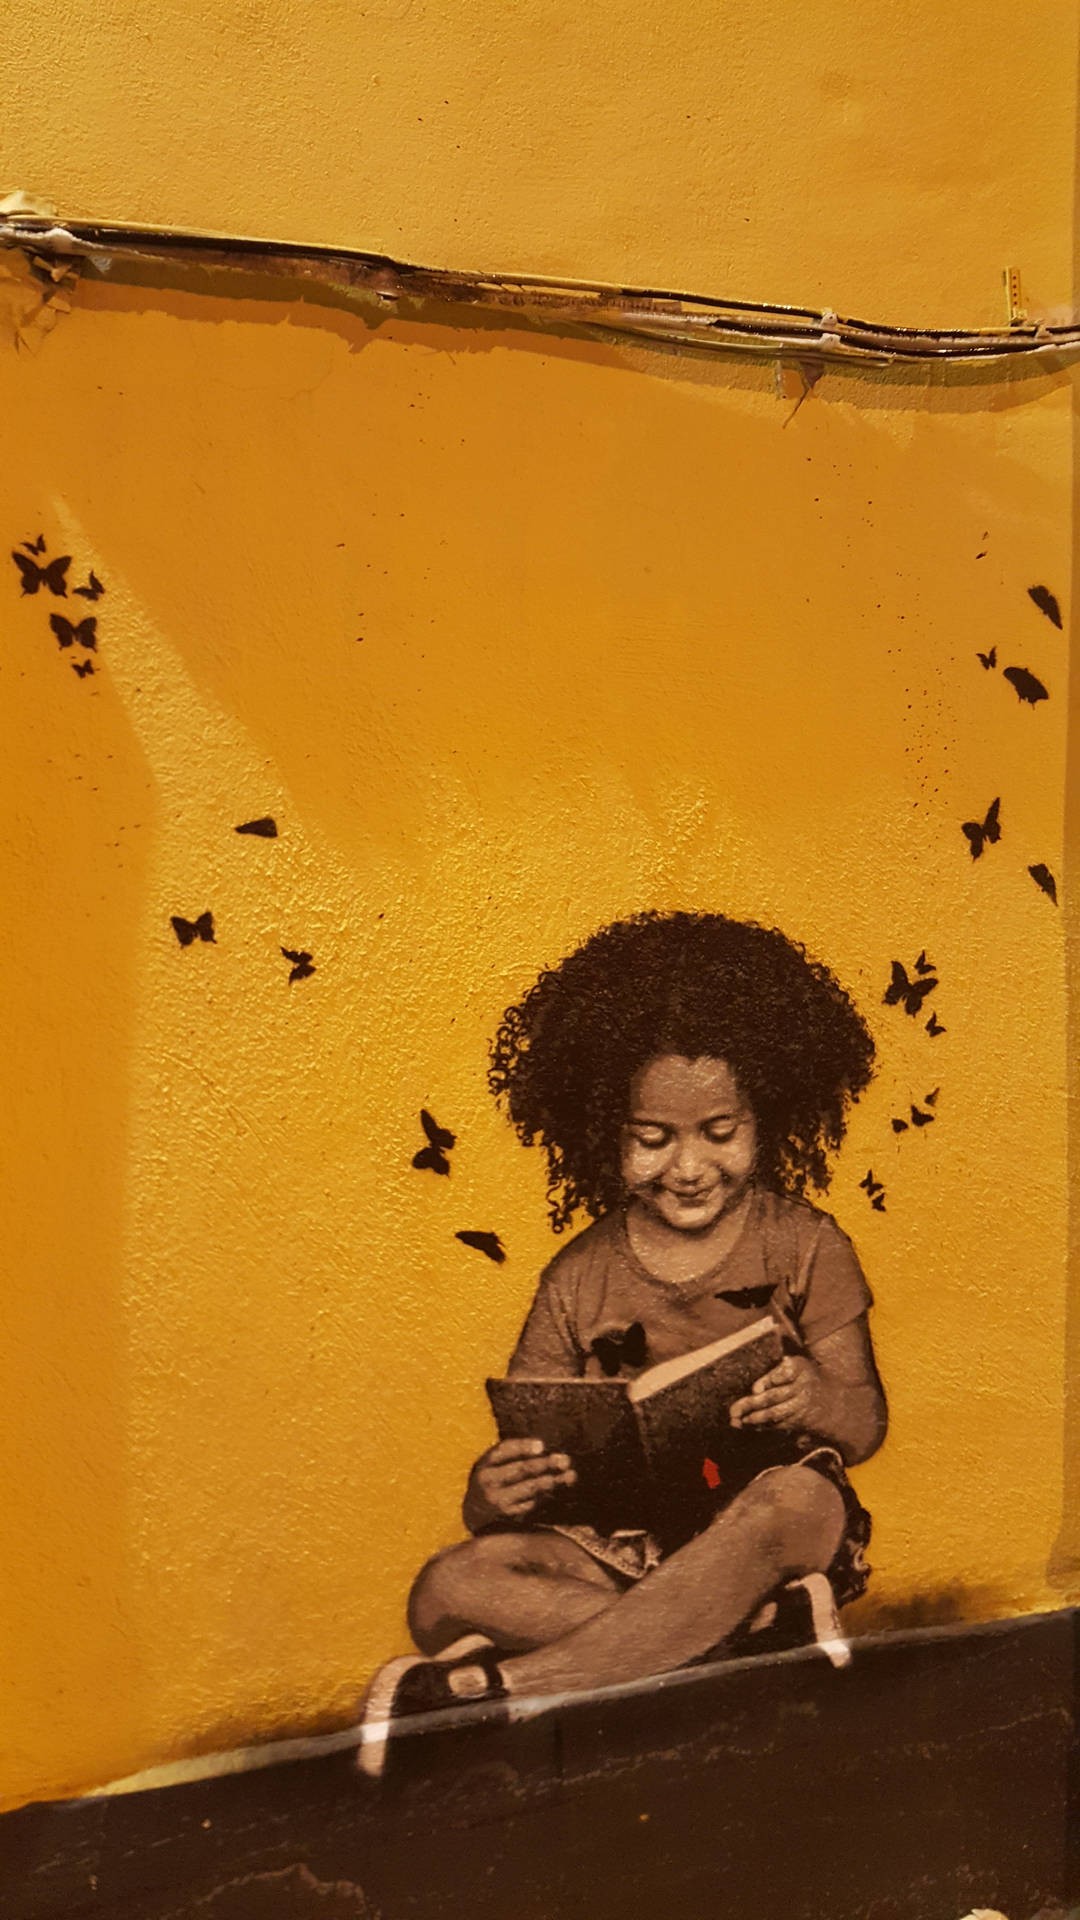 Reading Girl Wall Graffiti Iphone Background